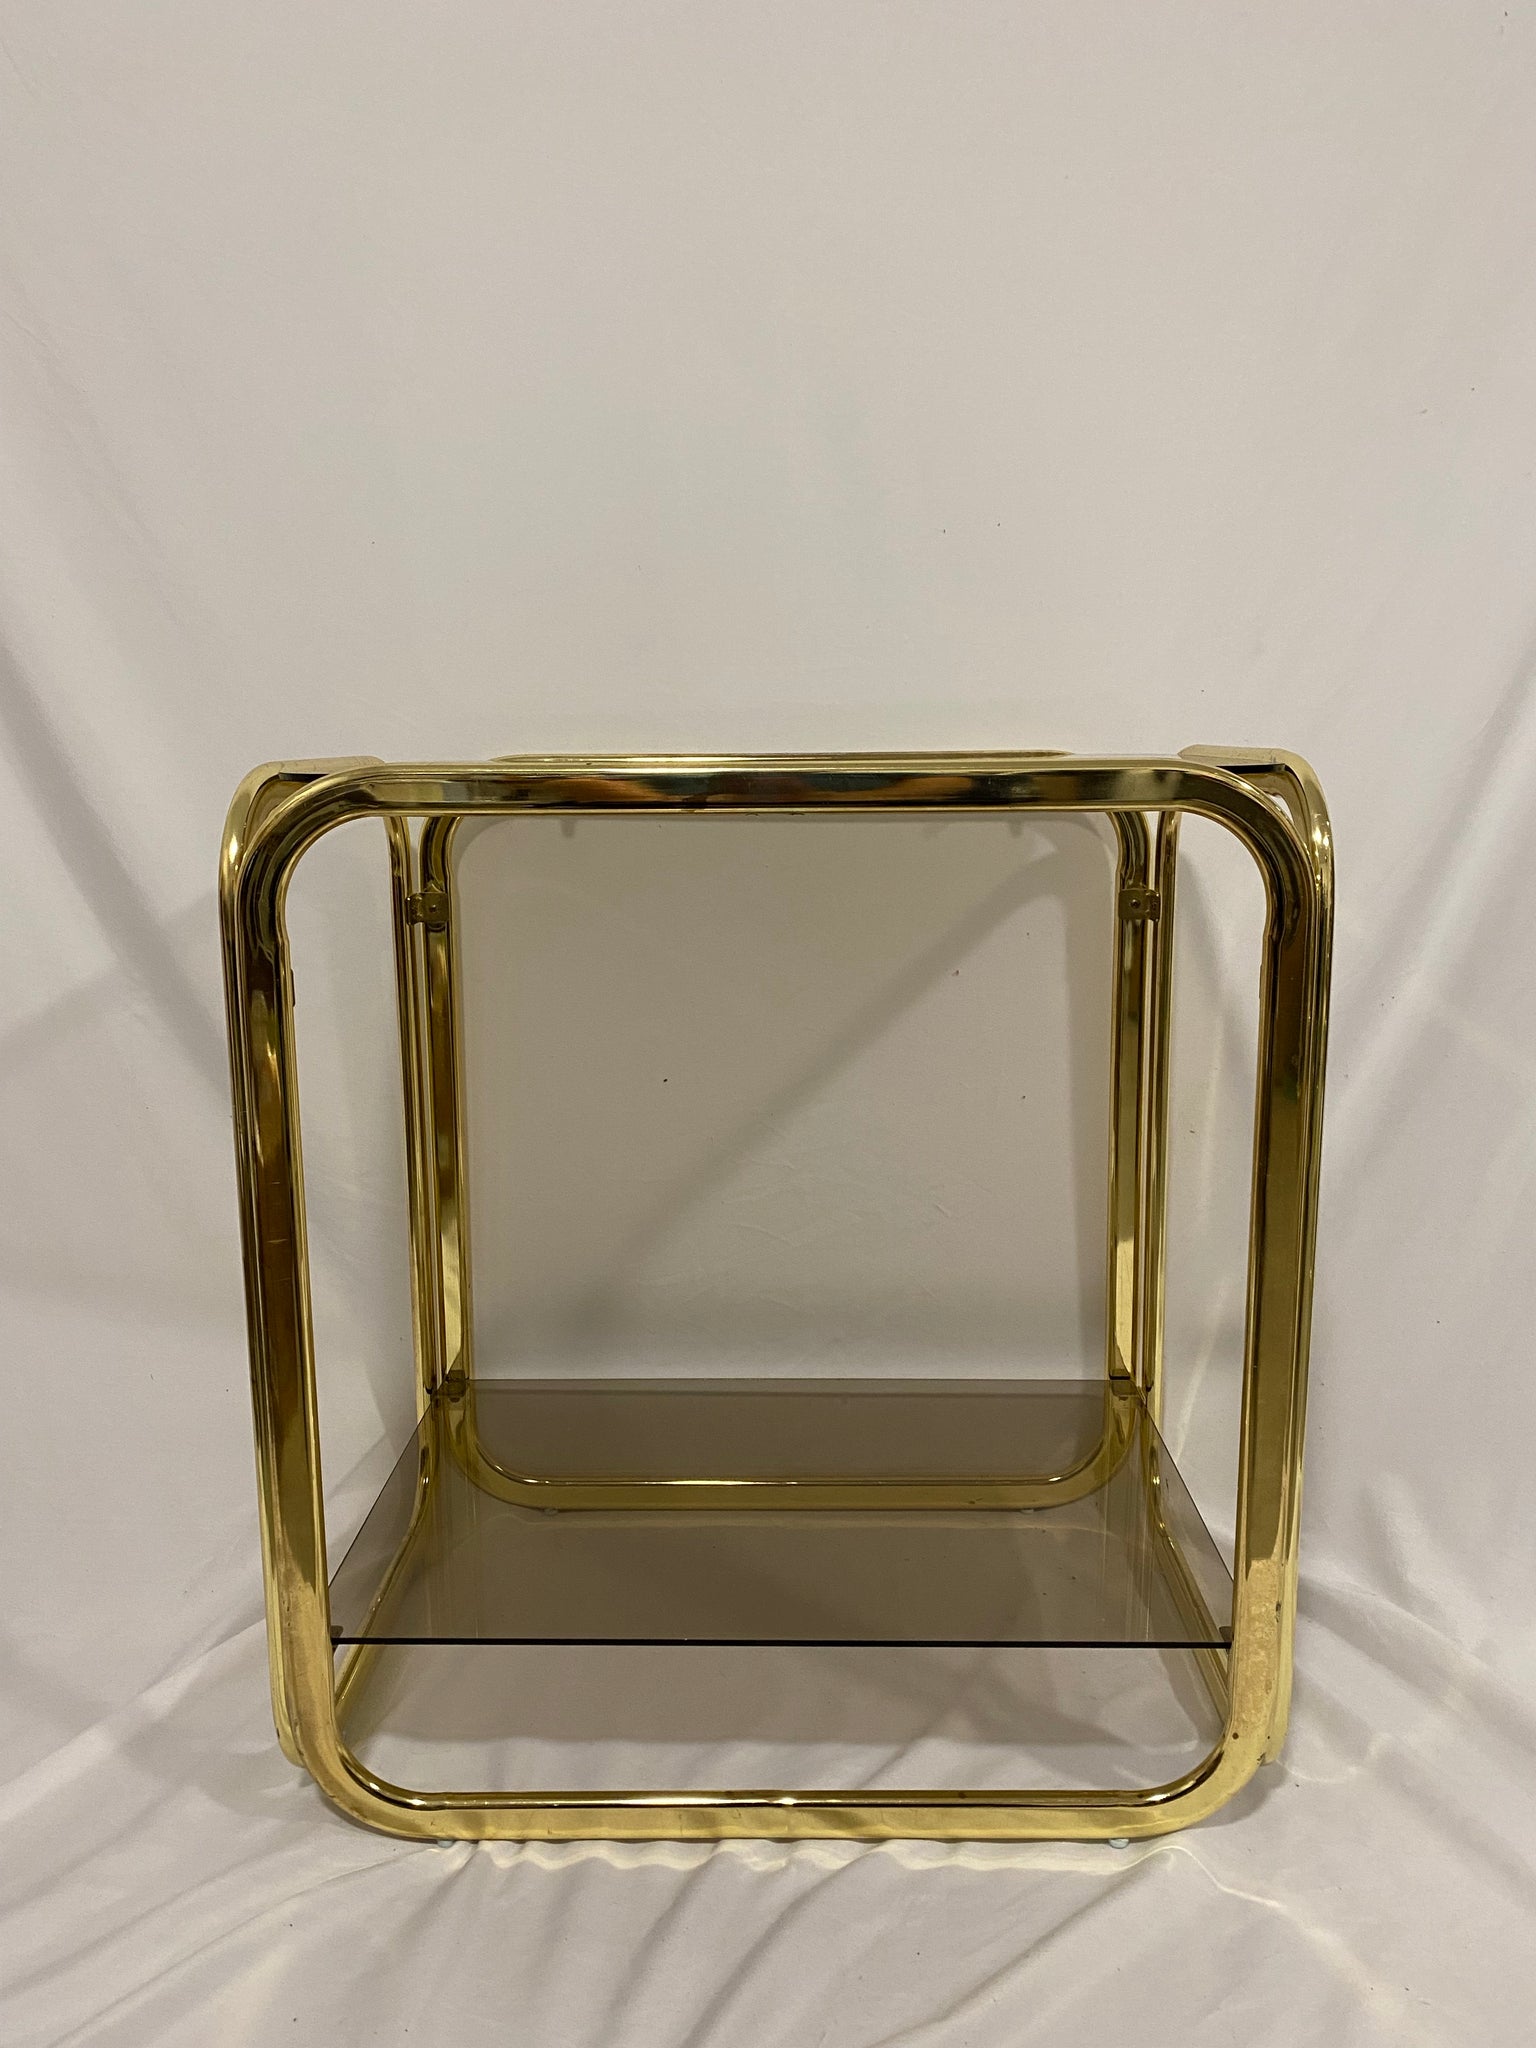 Golden brass table